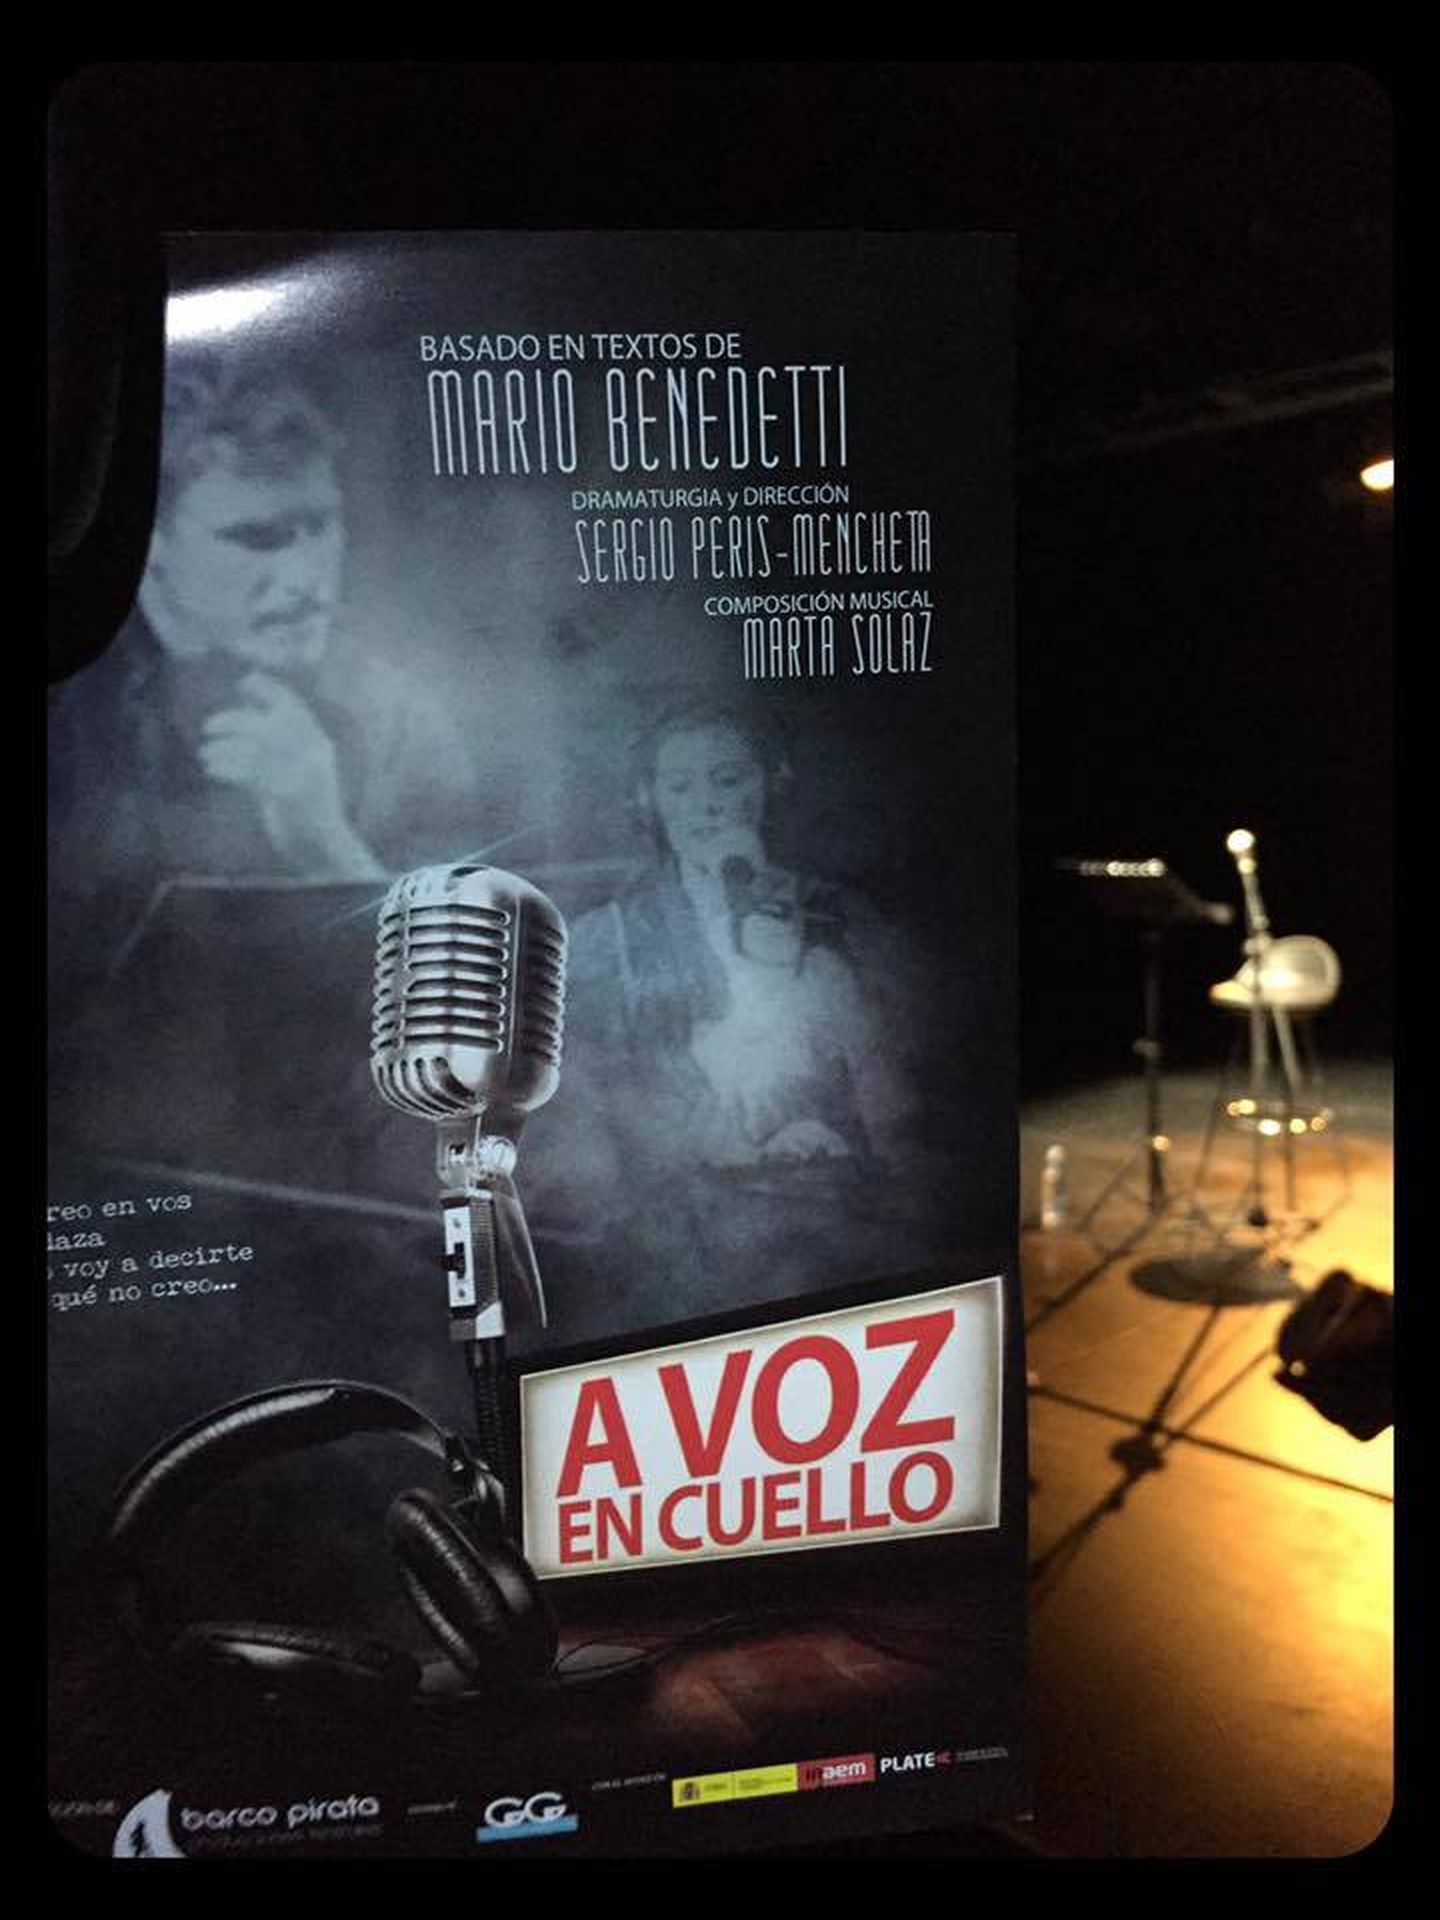 Mario Benedetti por Sergio Peris-Mencheta en 'A voz en cuello'